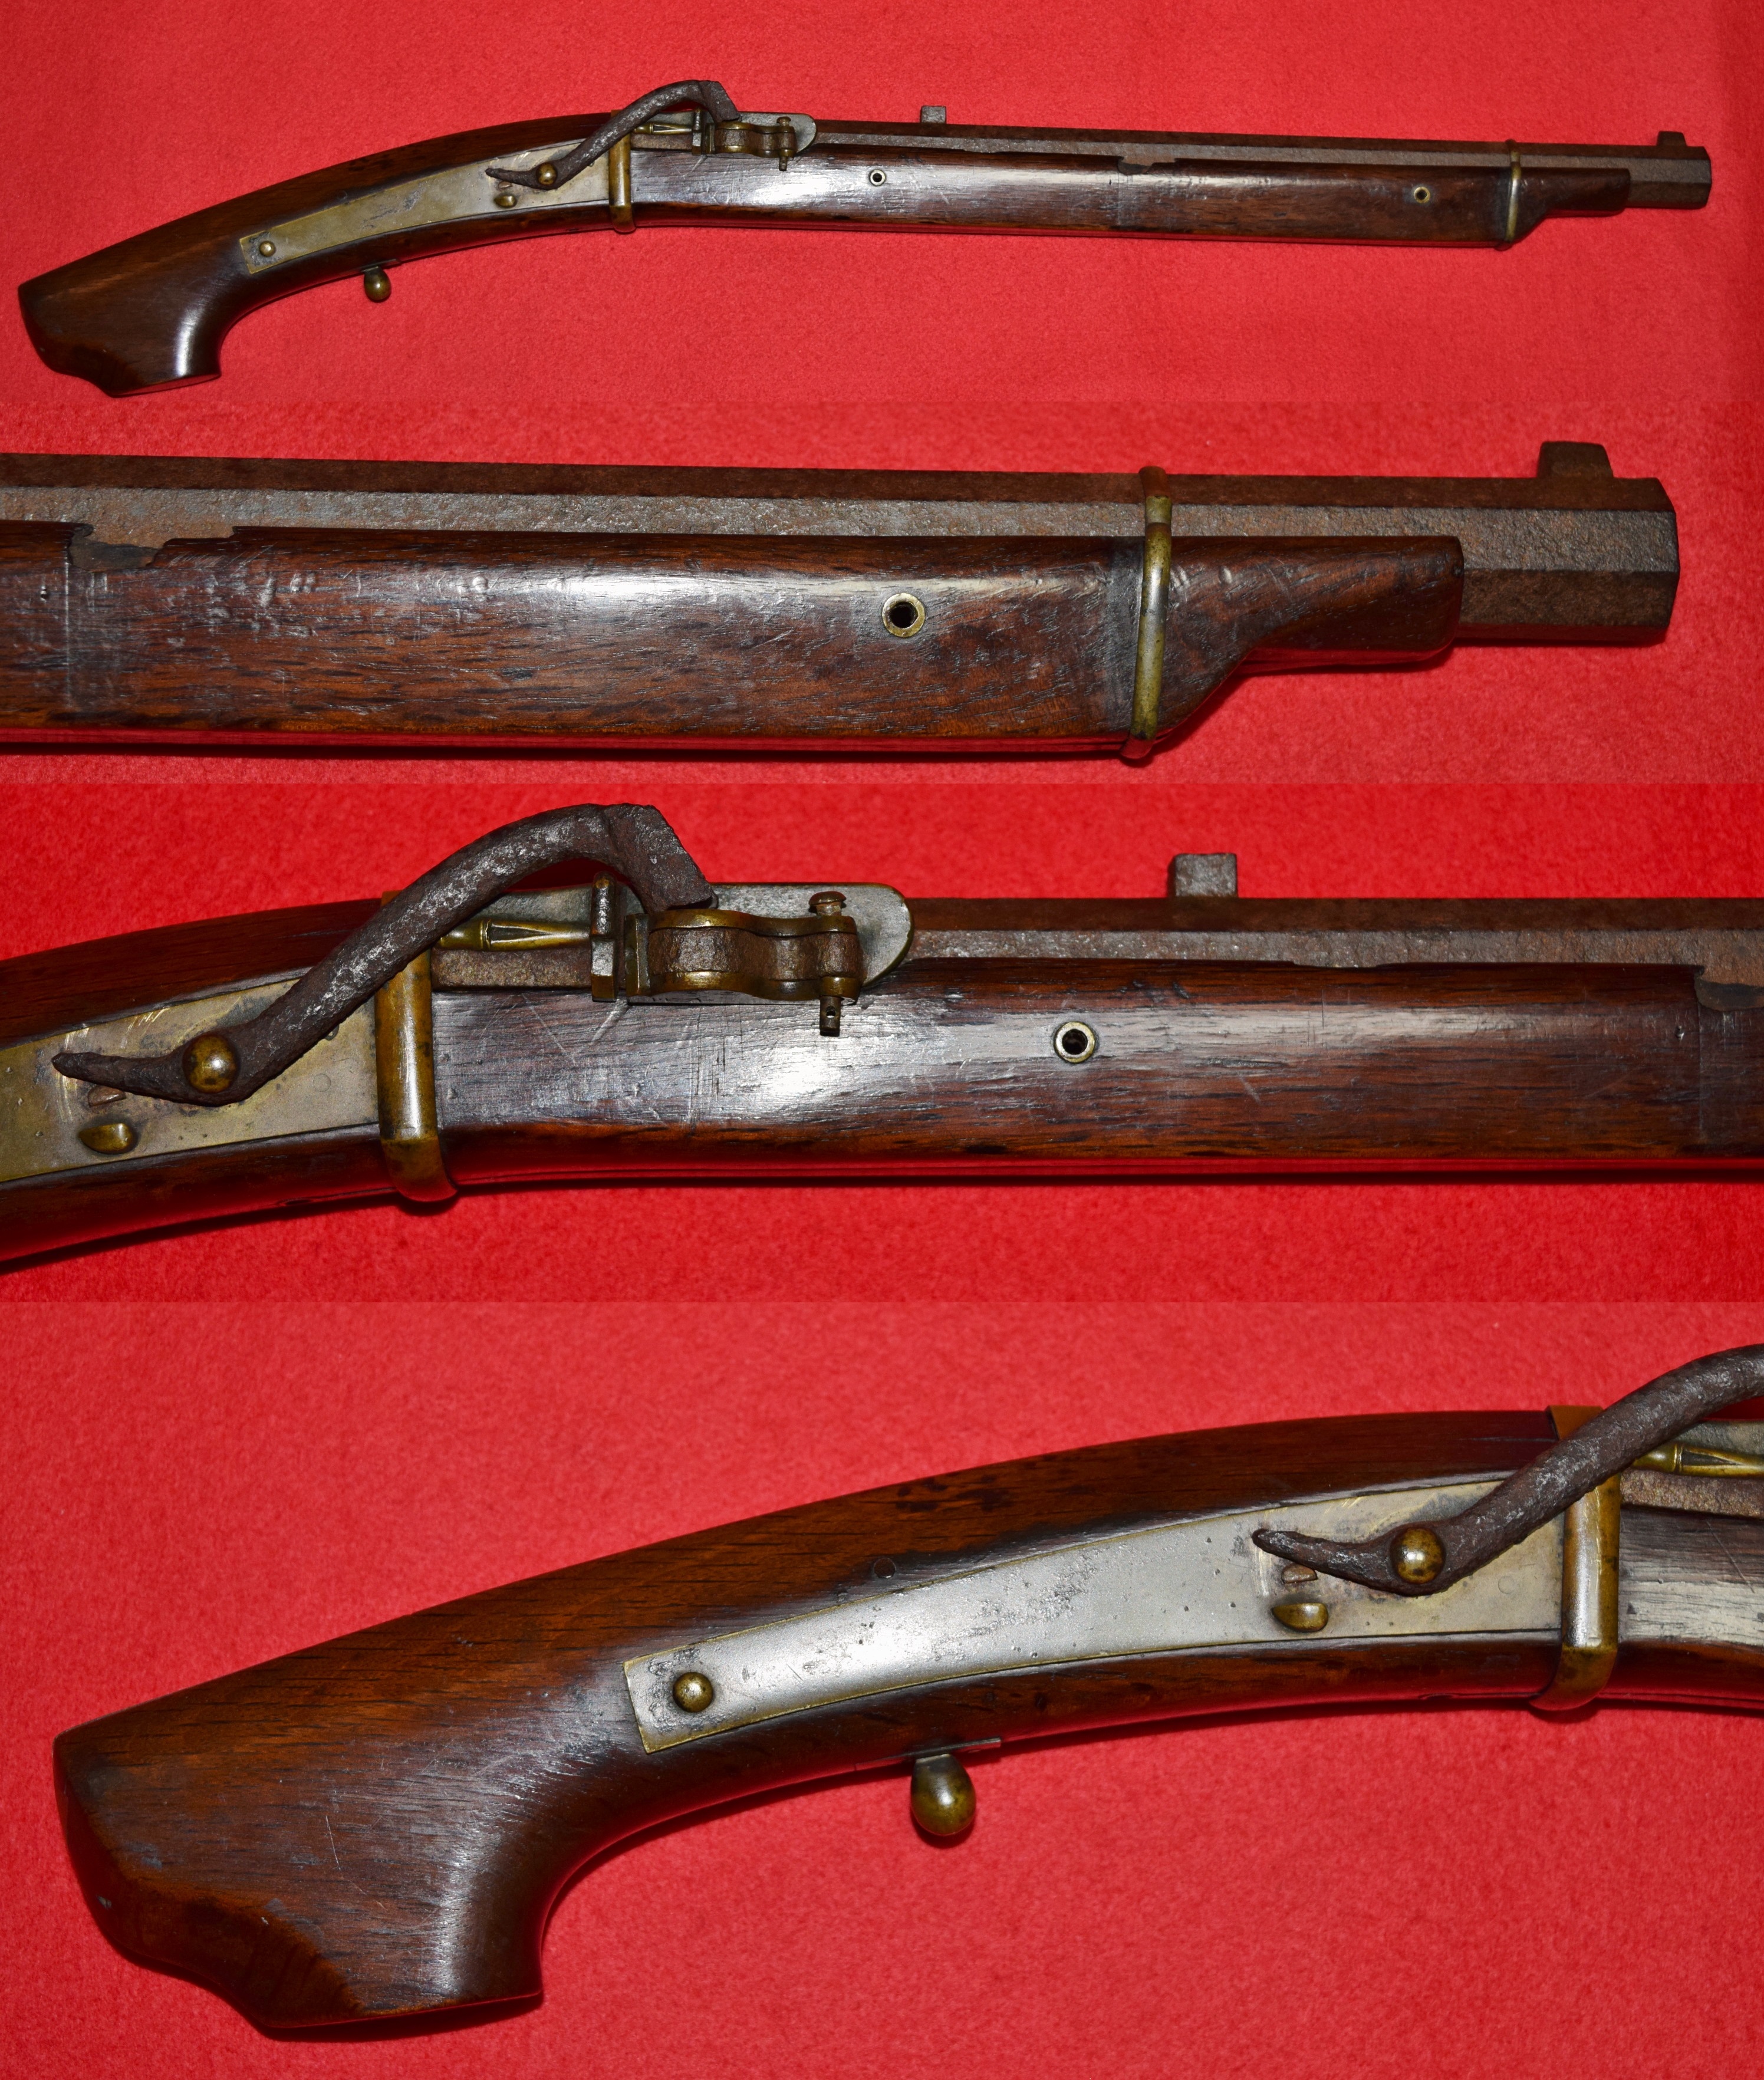 Bibian 比比昂- 火縄銃無銘馬上筒全長62cm 登録証付珍品番筒砲術古式銃 